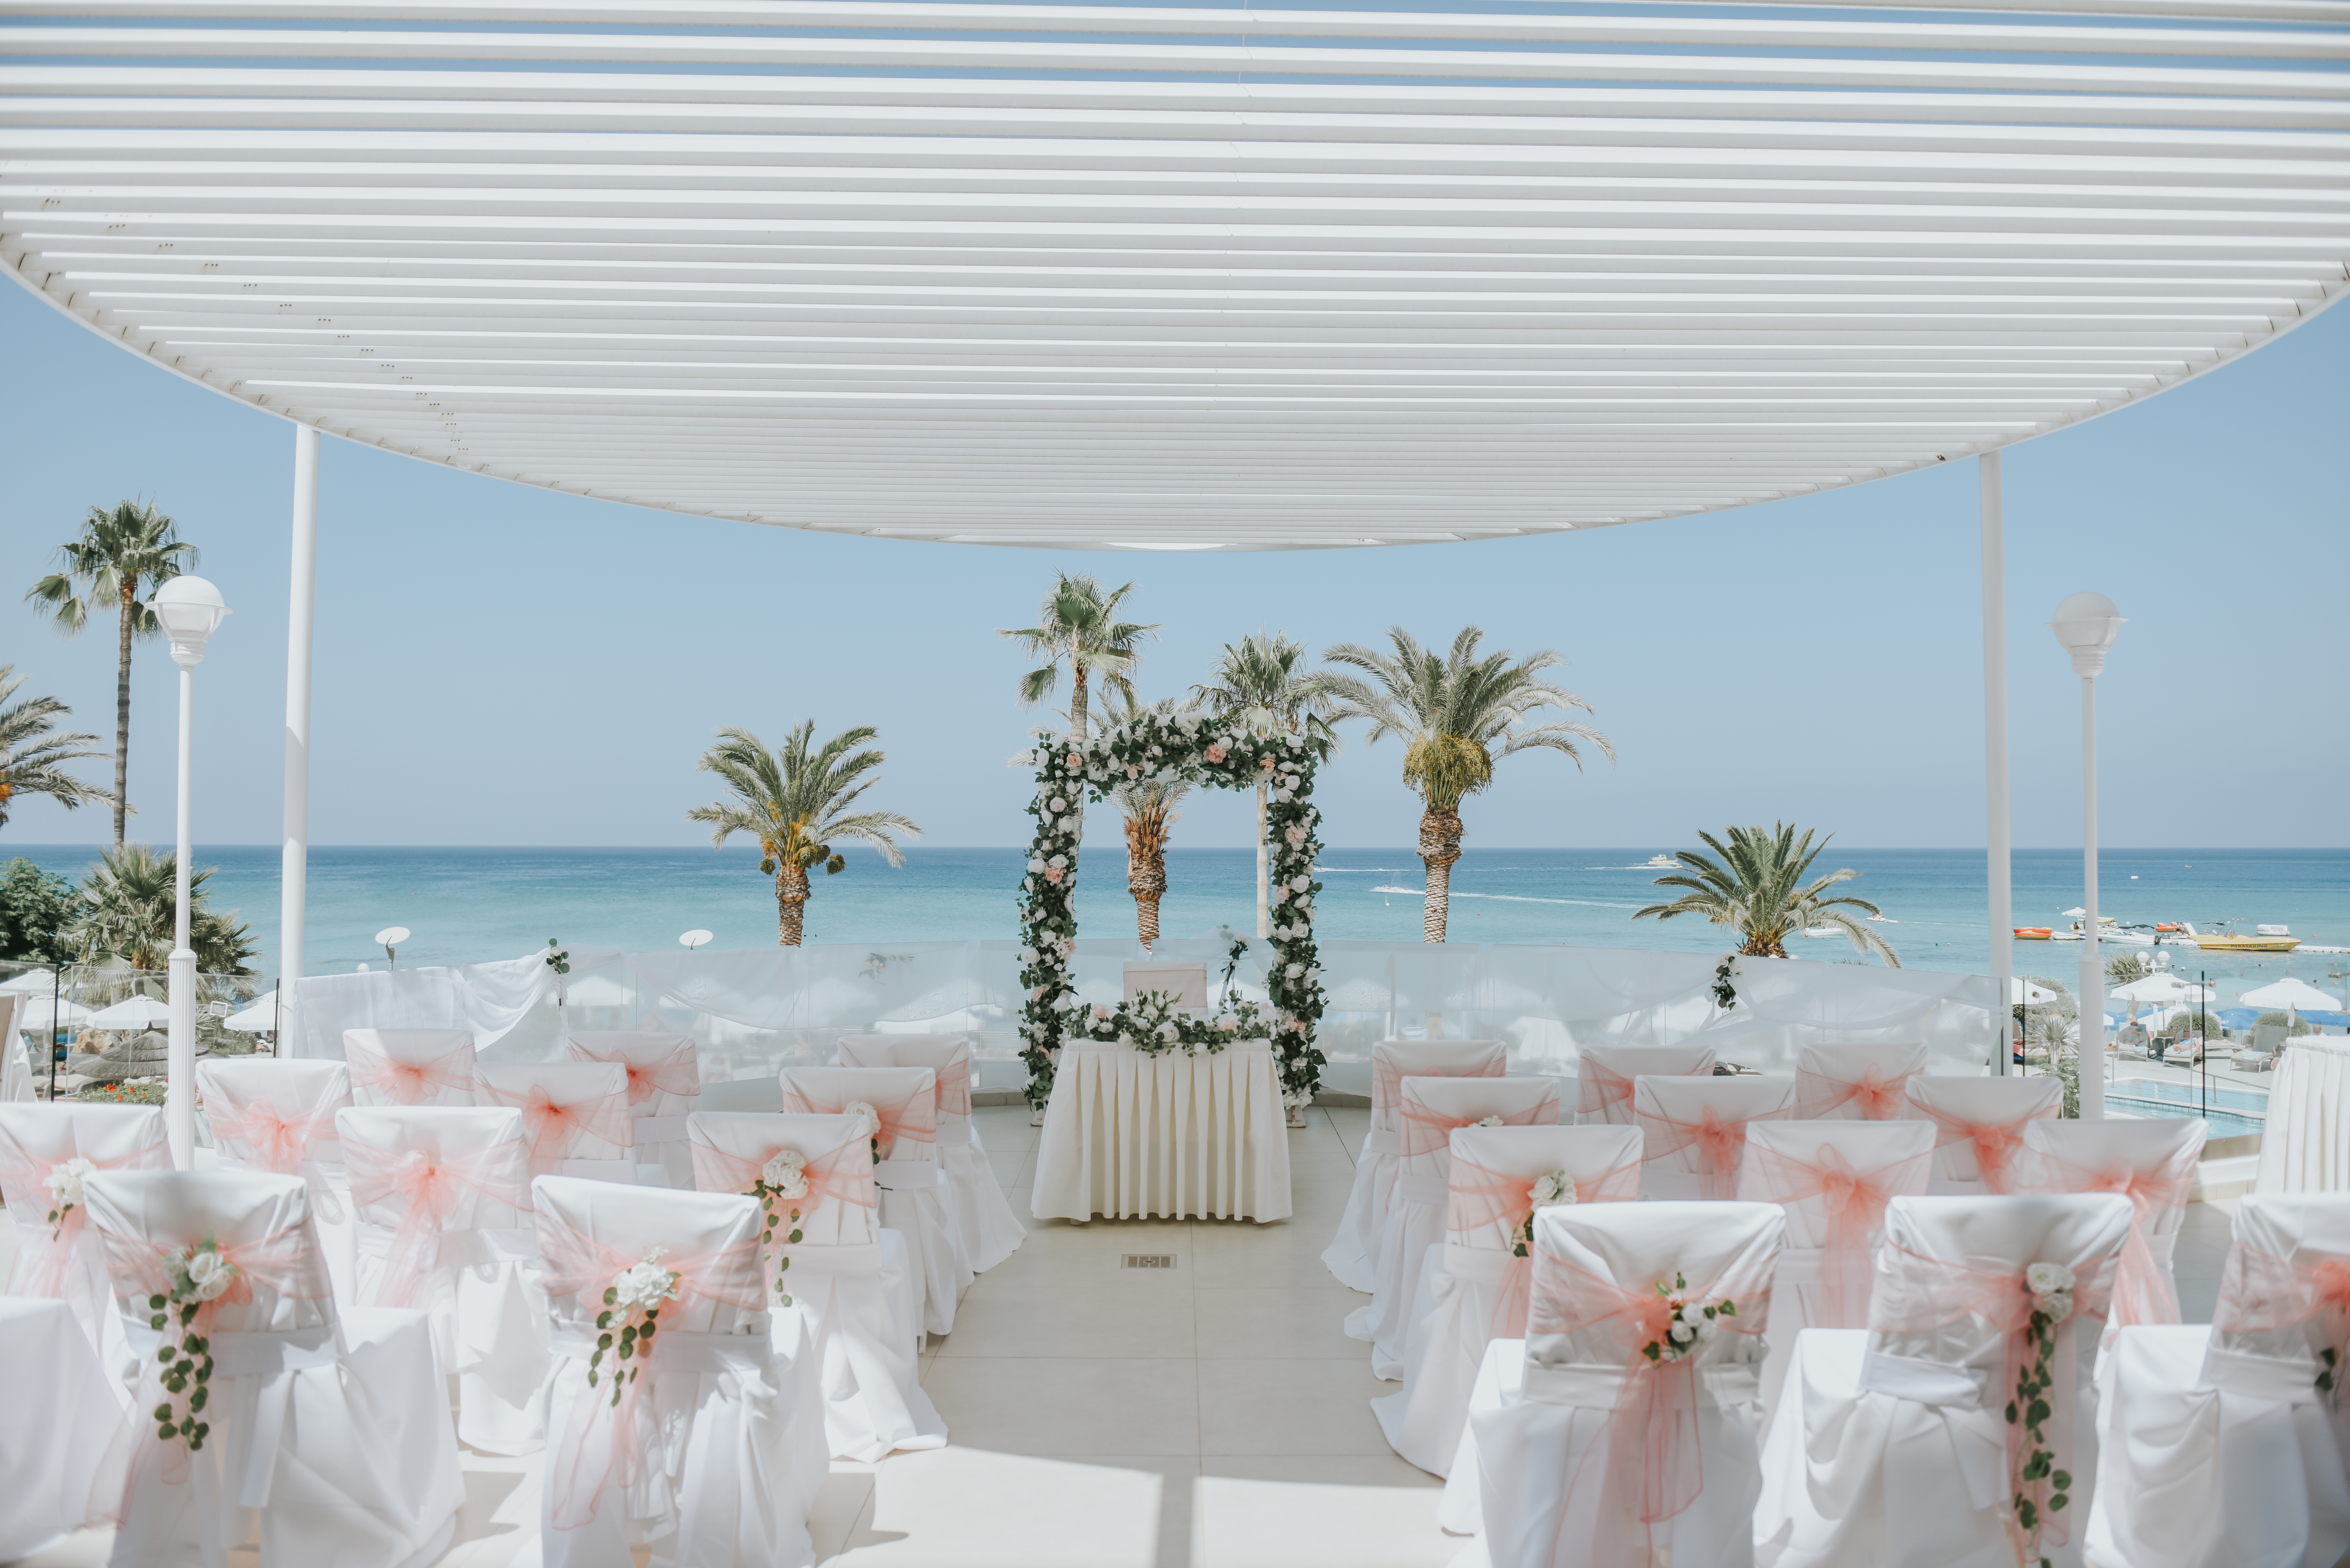 Book your wedding day in Sunrise Beach Hotel